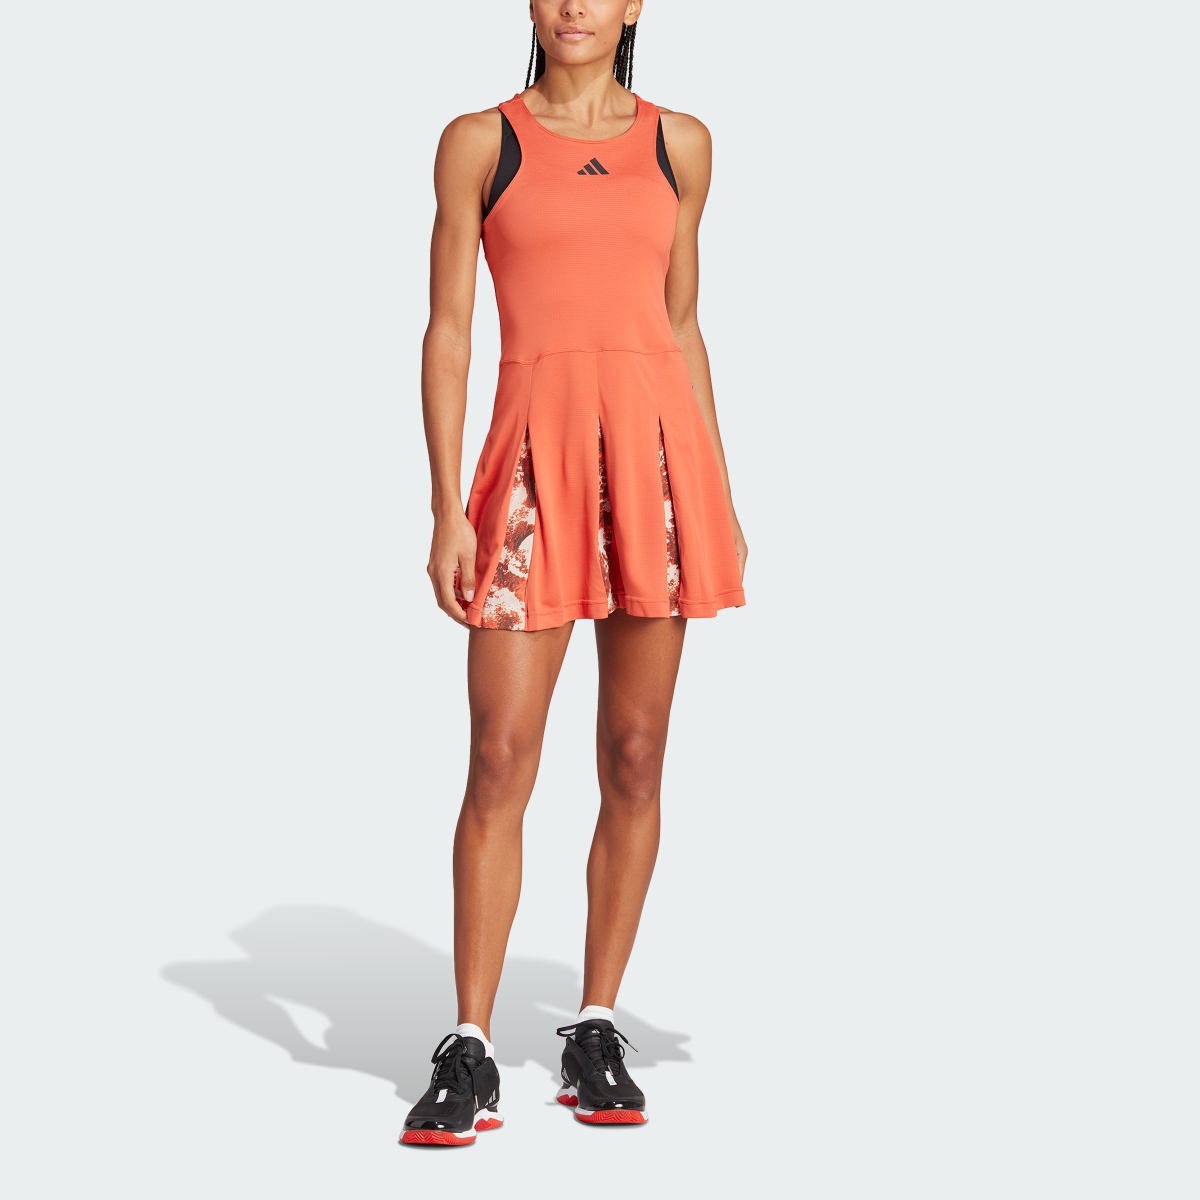 Adidas Tennis Paris Made to Be Remade Dress - HU1814